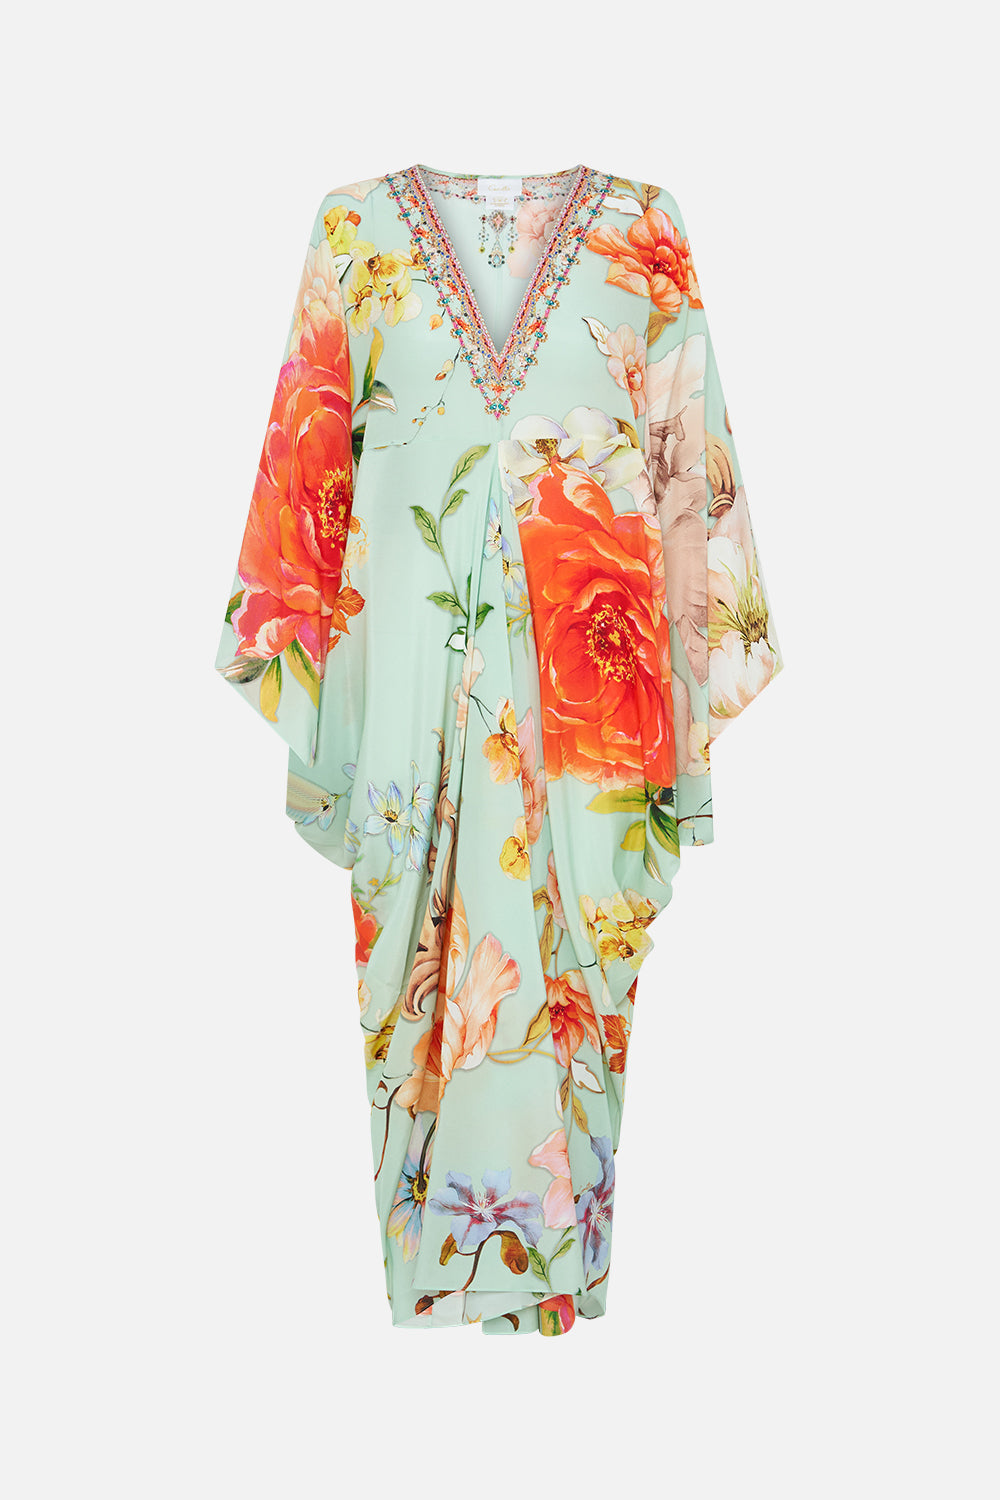 Product view of CAMILLA floral silk kaftan in Talk The Walk print 